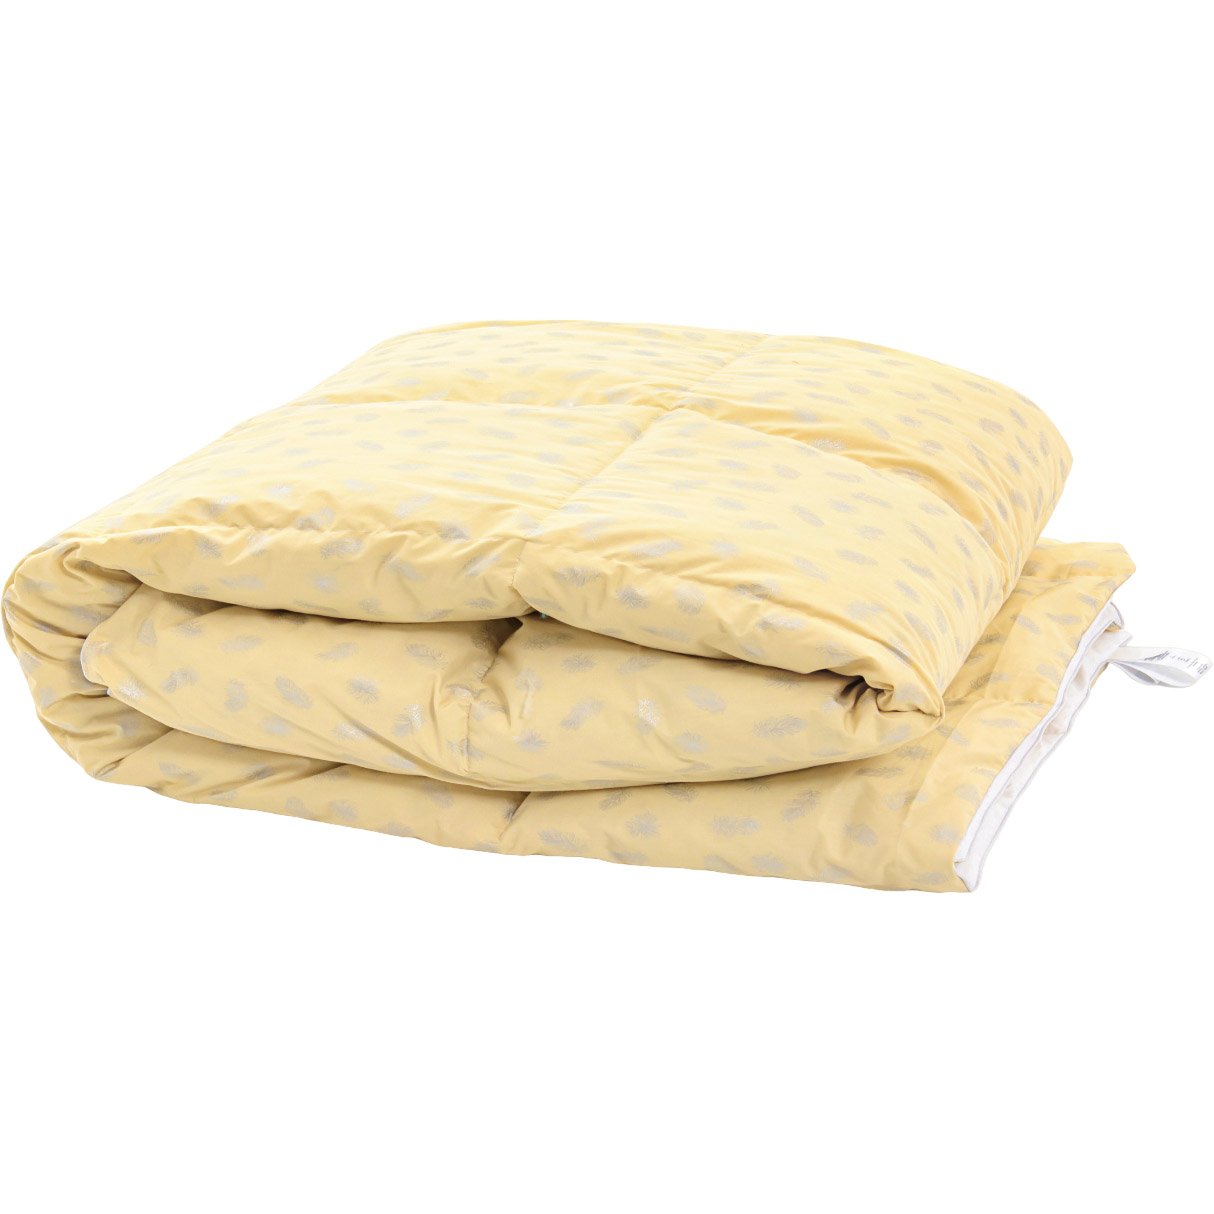 Одеяло пуховое MirSon Karmen №1851 Bio-Beige, 50% пух, двуспальное, 205x172, бежевое (2200003014662) - фото 1